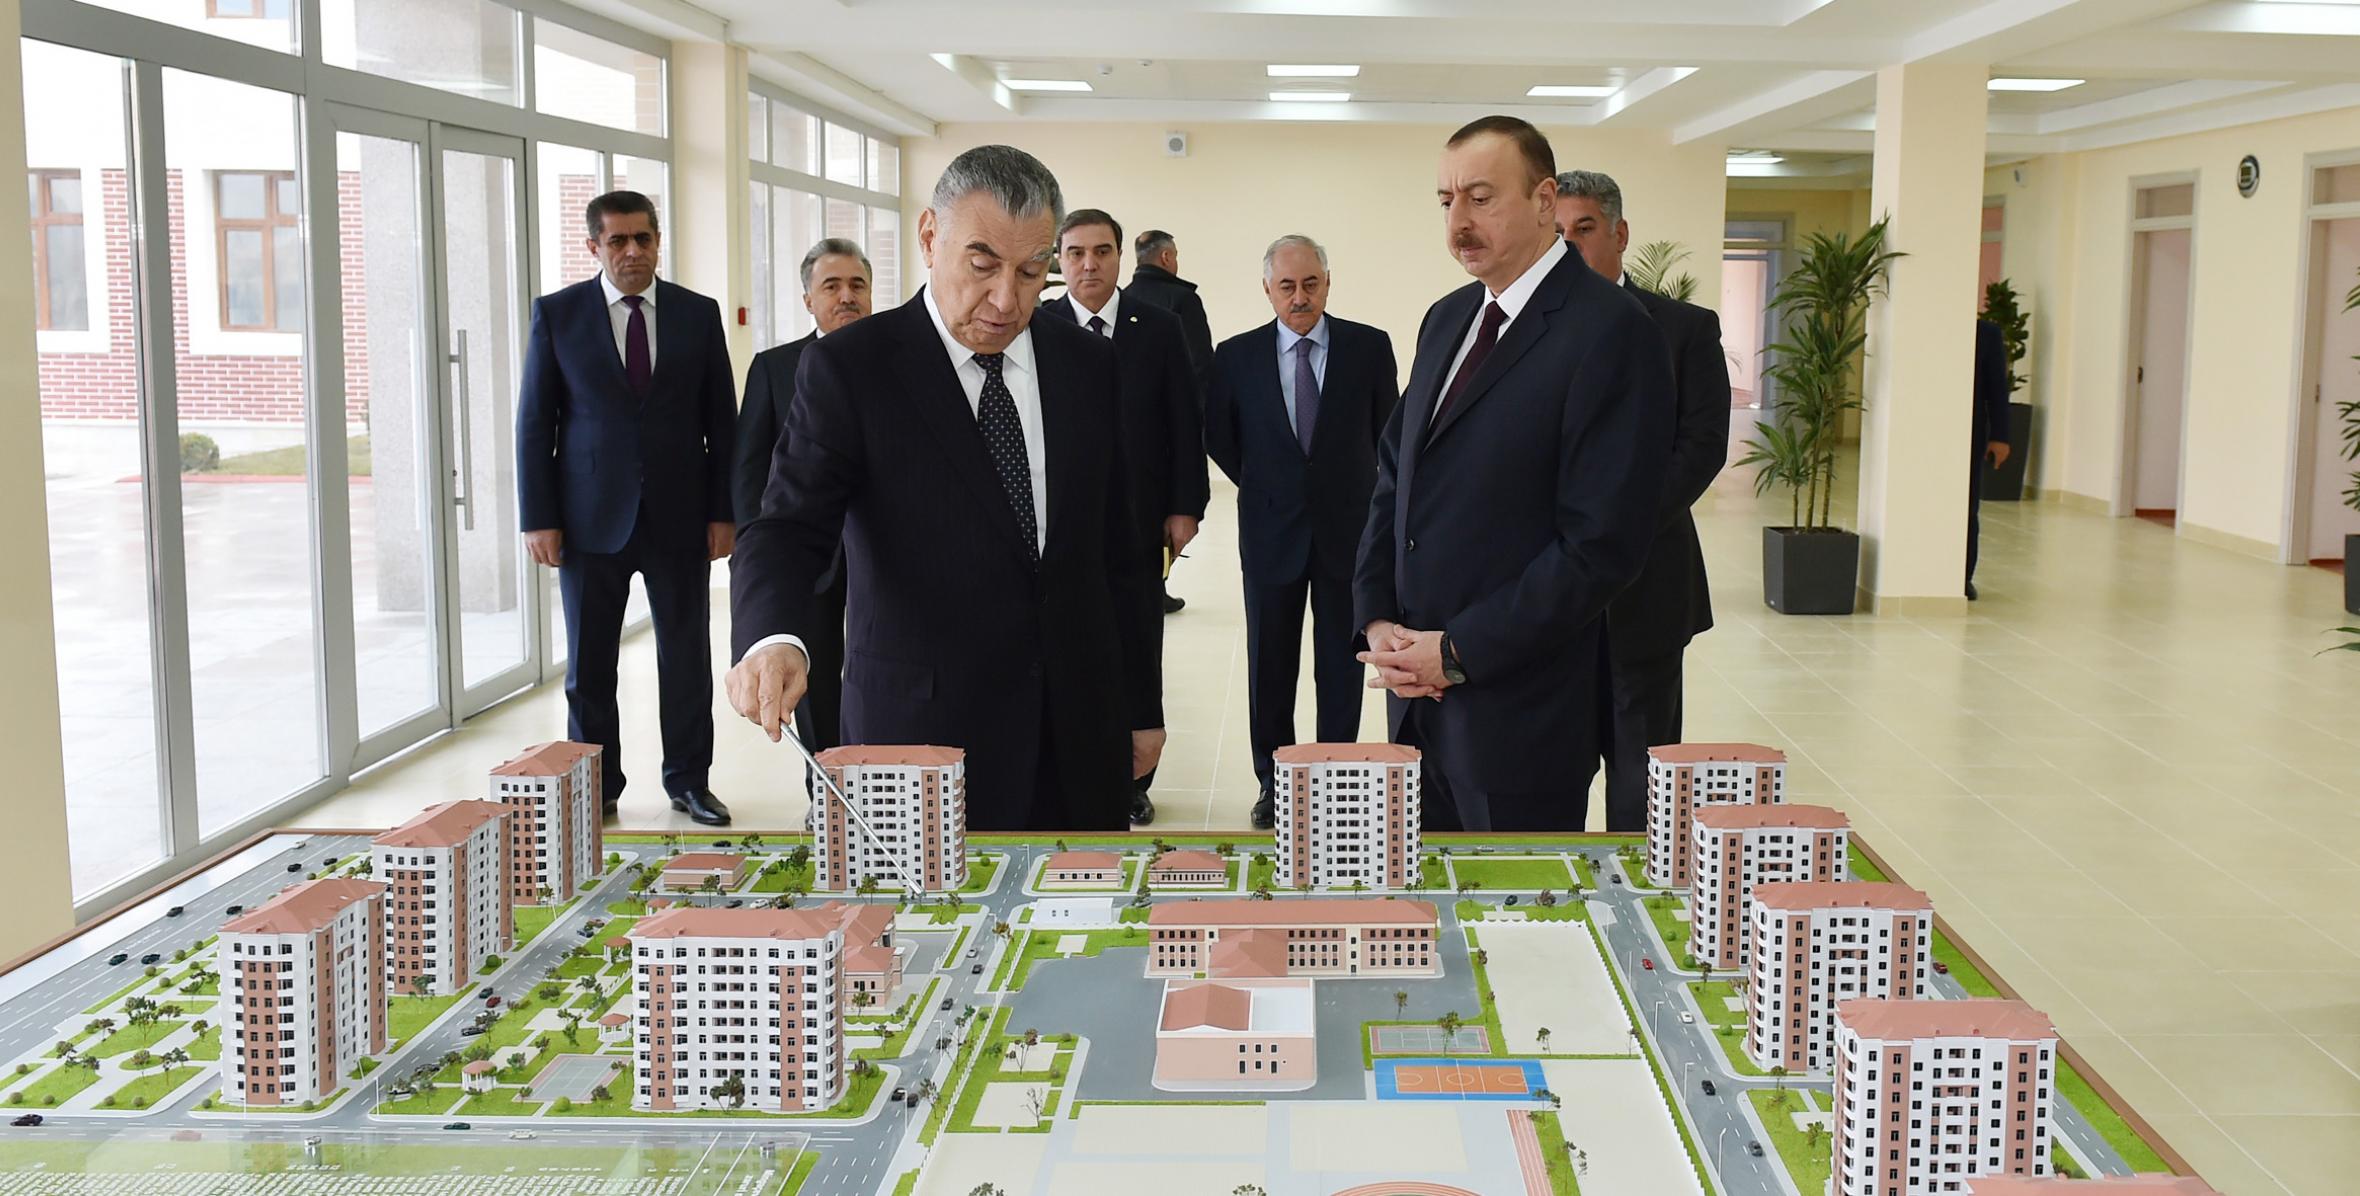 Visit of Ilham Aliyev to Mingachevir